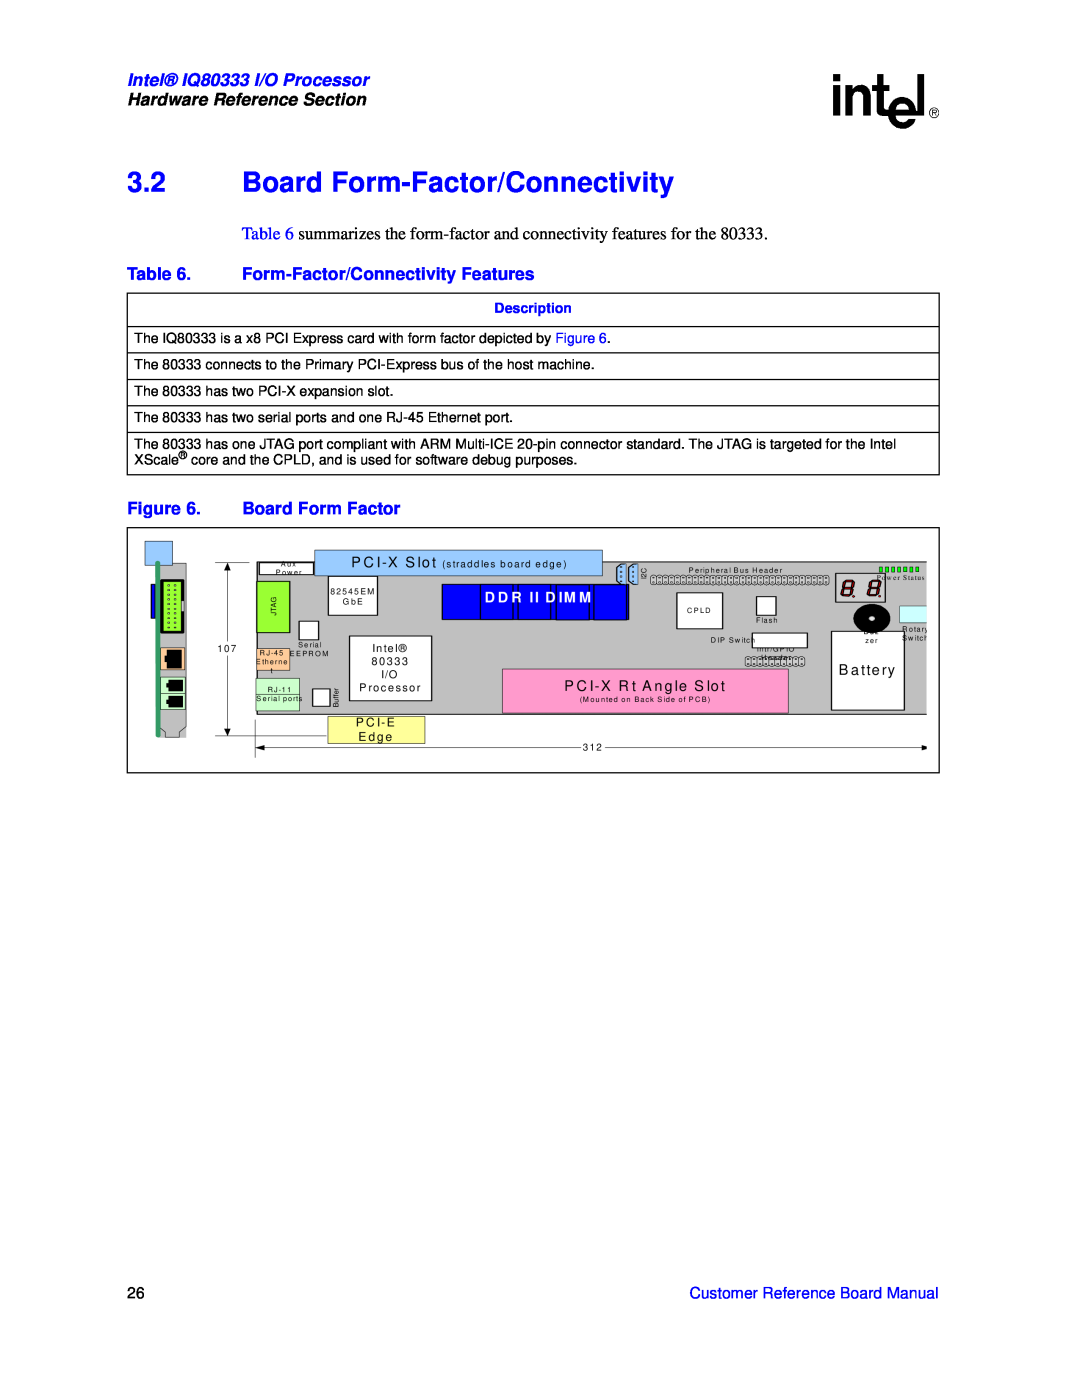 Intel IQ80333 manual 3.2Board Form-Factor/Connectivity, Form-Factor/ConnectivityFeatures, Board Form Factor, Description 